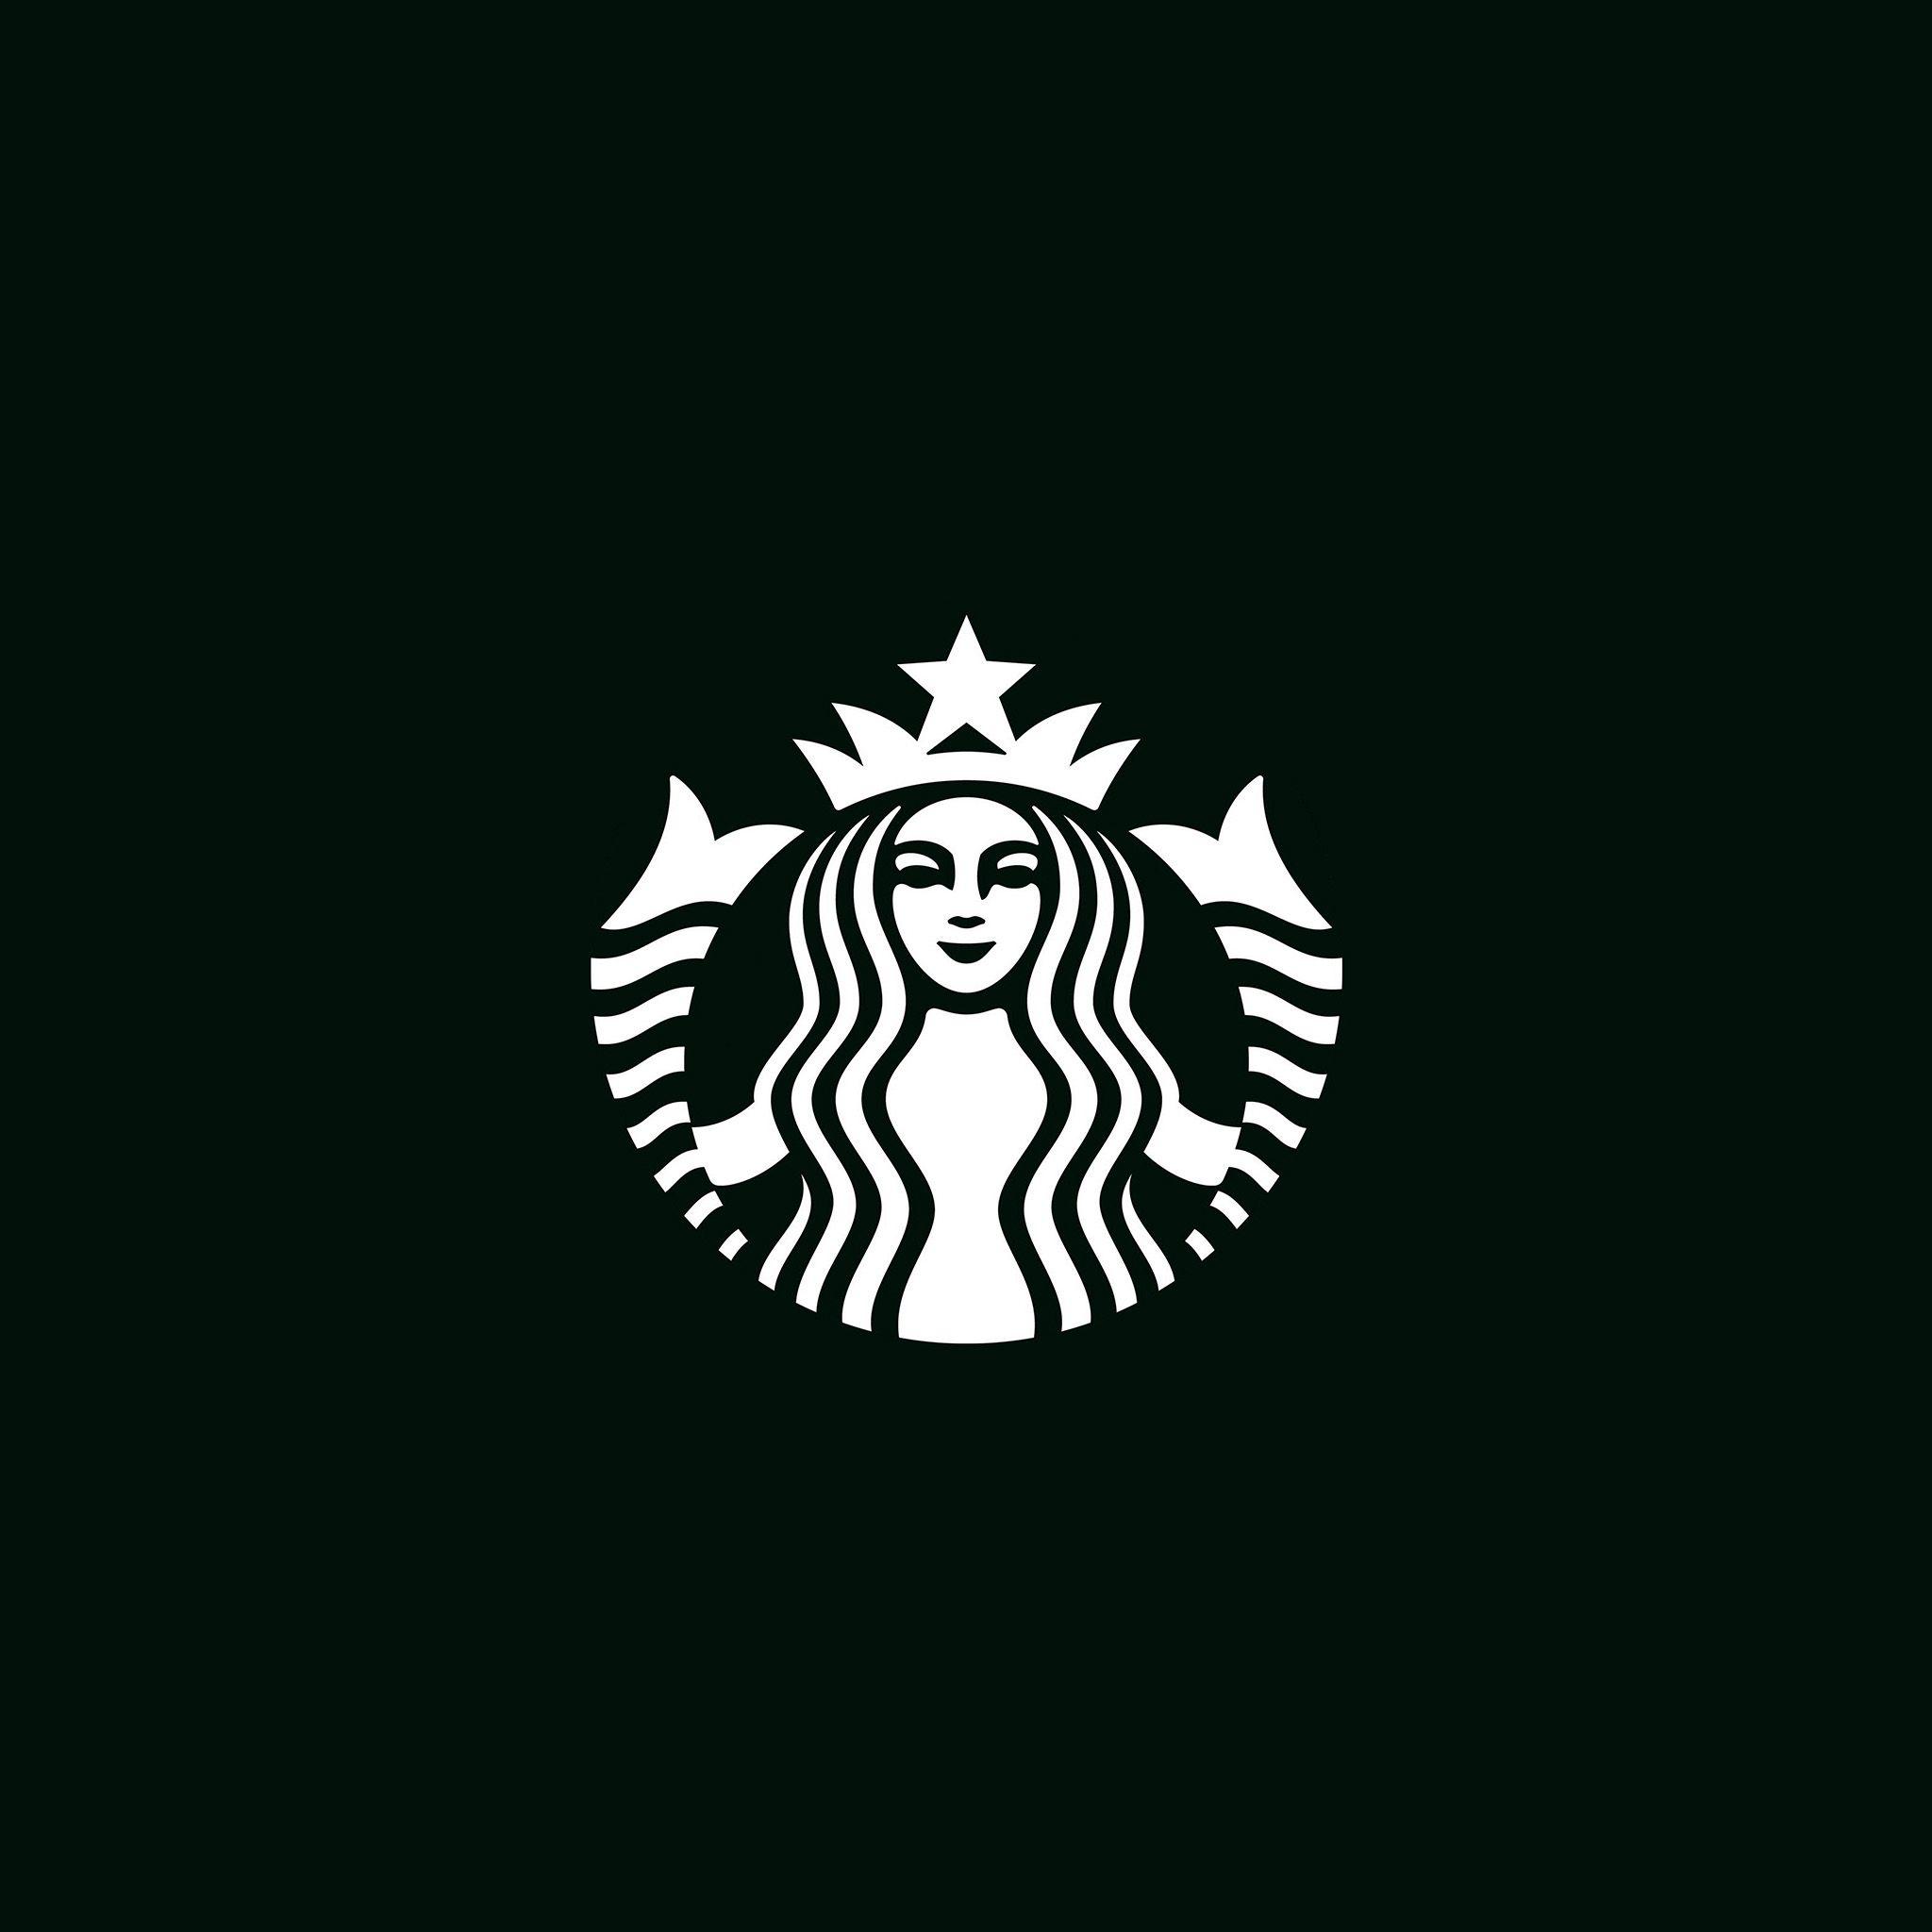 Medium Starbucks Logo - I Love Papers. starbucks logo dark bw illustration art